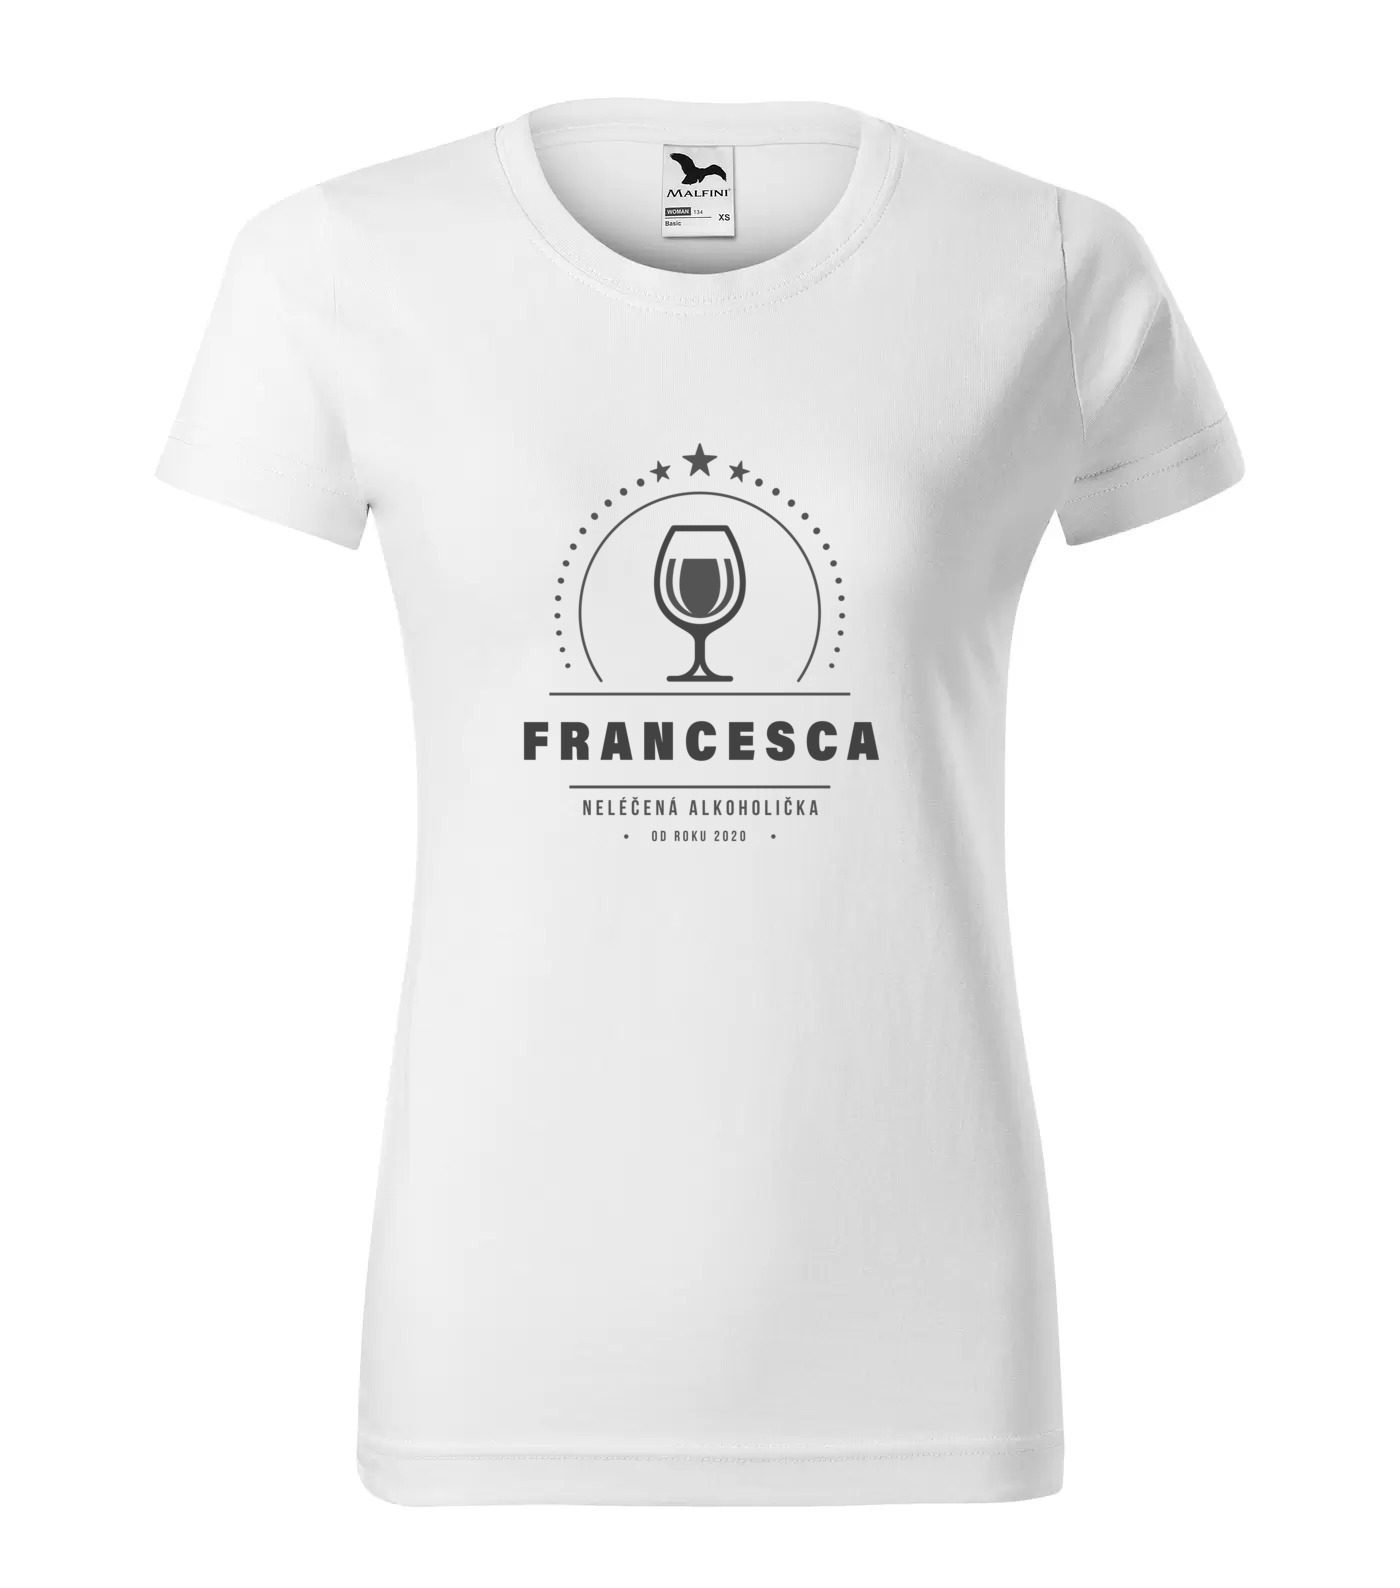 Tričko Alkoholička Francesca